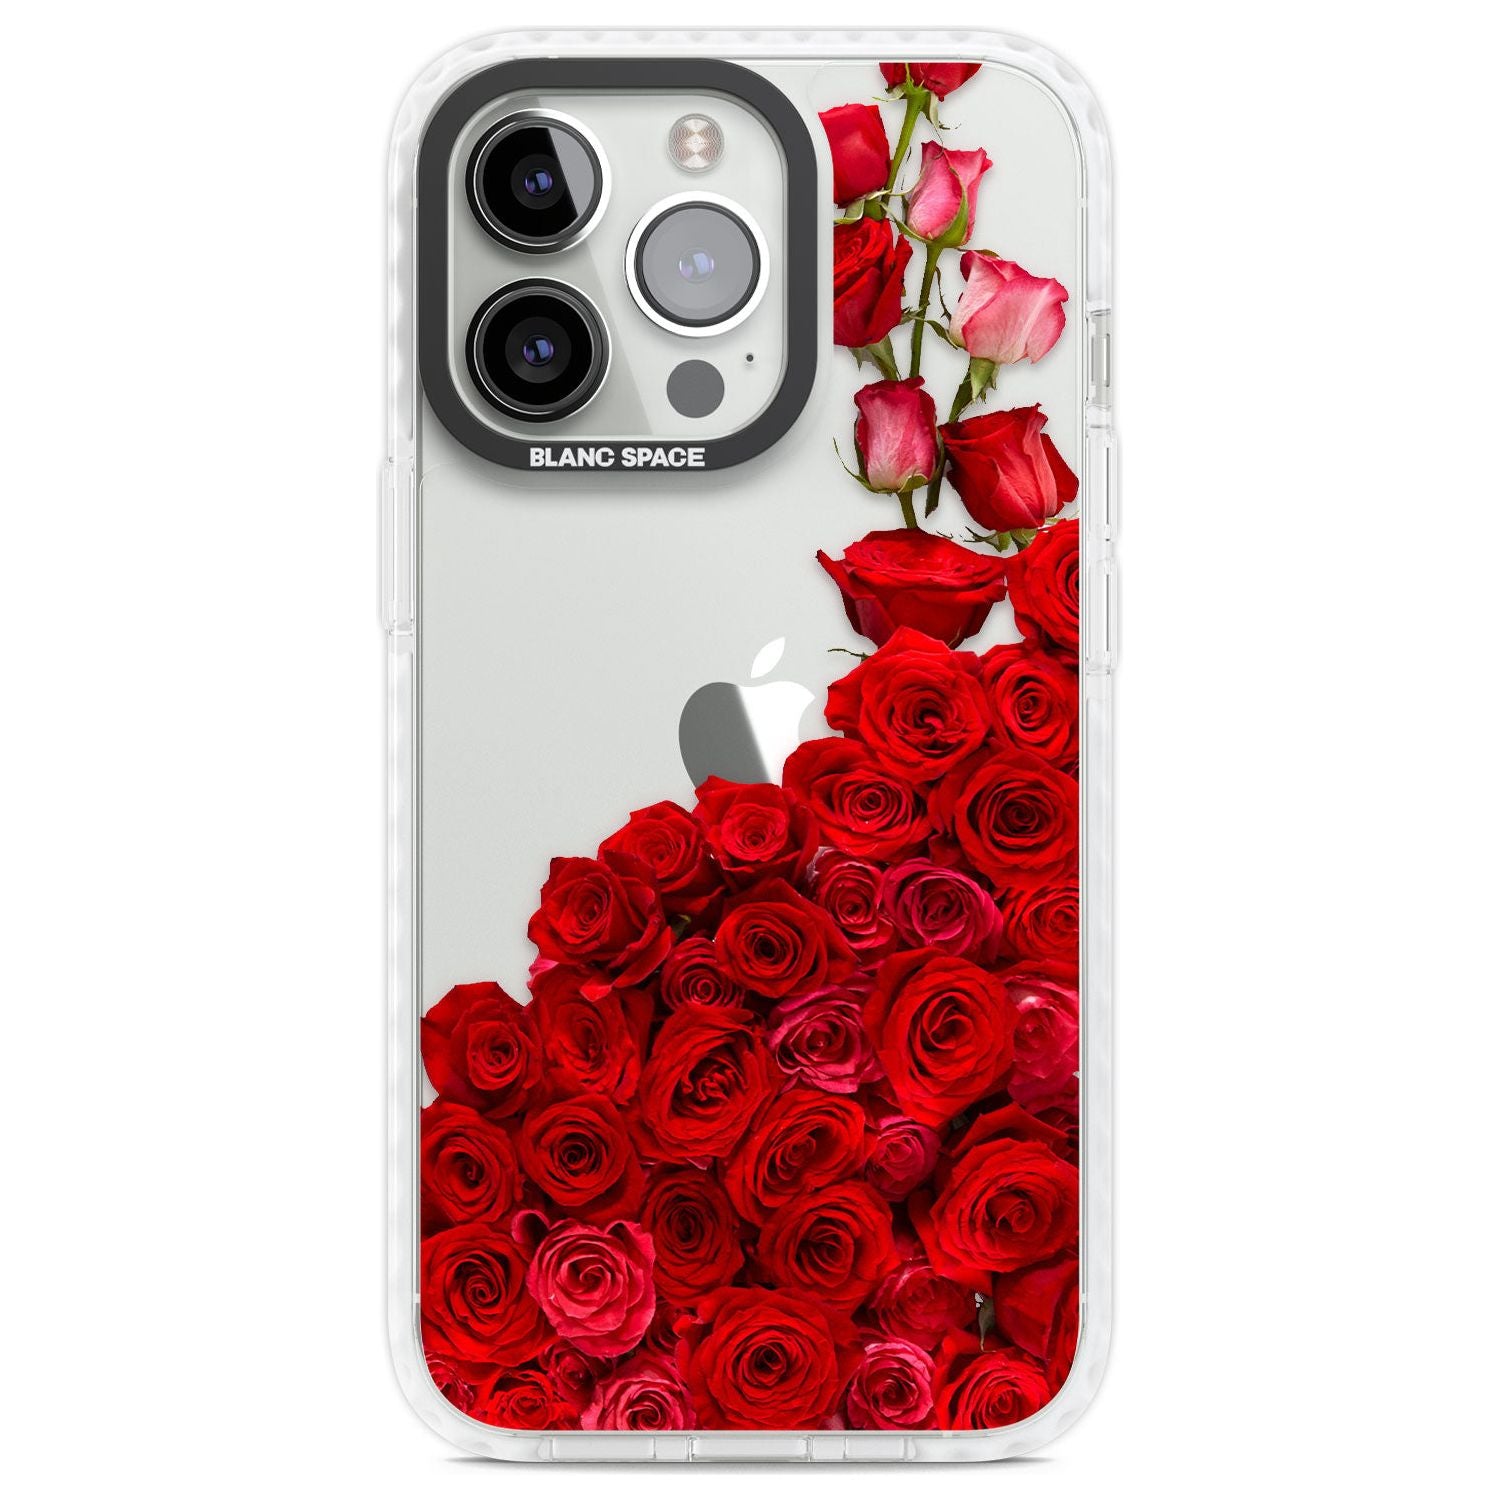 Floral Roses Phone Case iPhone 13 Pro / Impact Case,iPhone 14 Pro / Impact Case,iPhone 15 Pro / Impact Case,iPhone 15 Pro Max / Impact Case Blanc Space